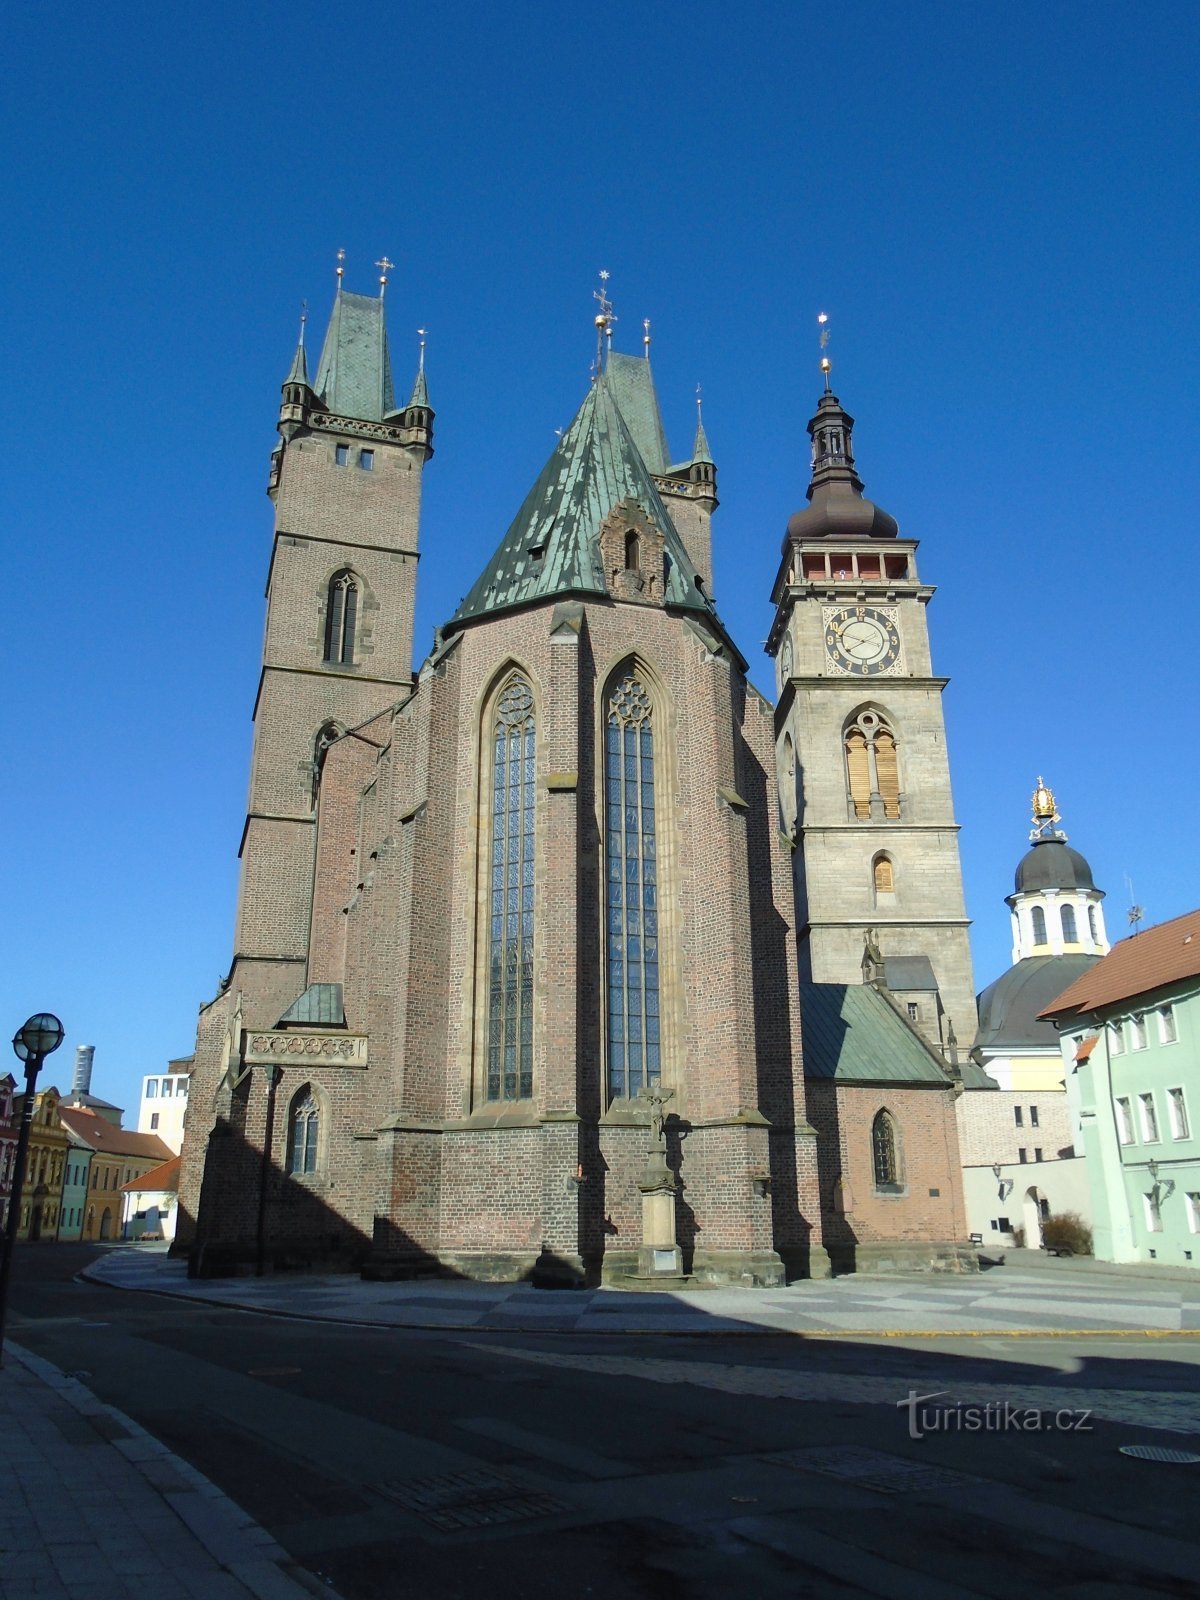 Nhà thờ St. Ghost with the White Tower (Hradec Králové)